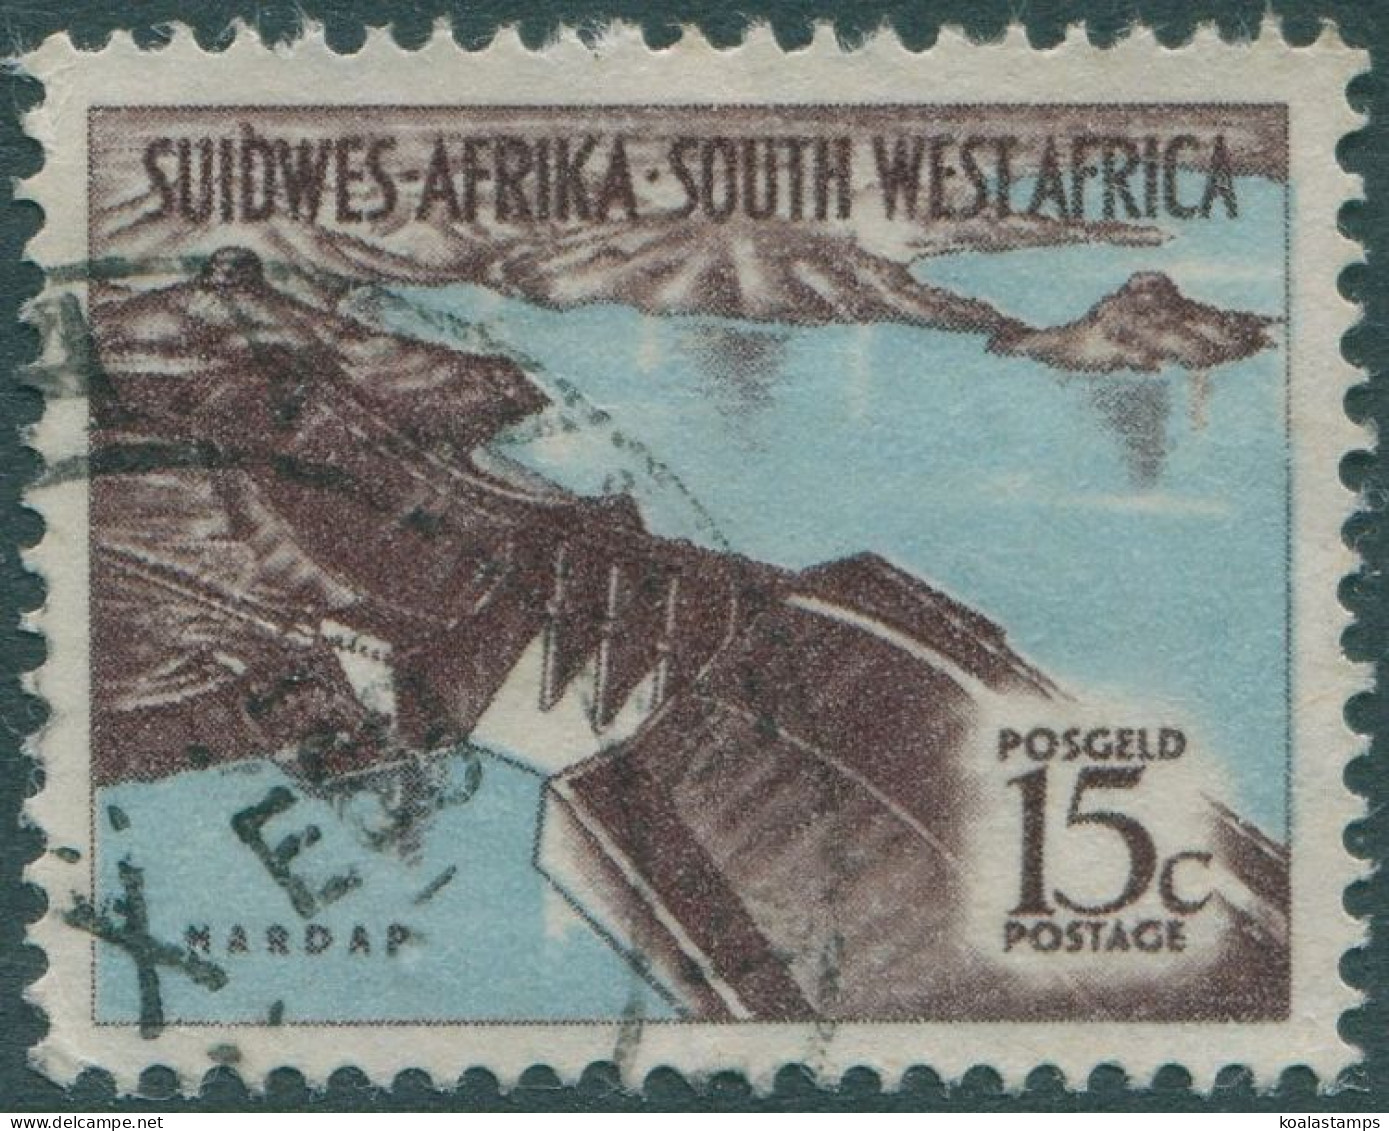 South West Africa 1961 SG182 15c Hardap Dam FU - Namibie (1990- ...)